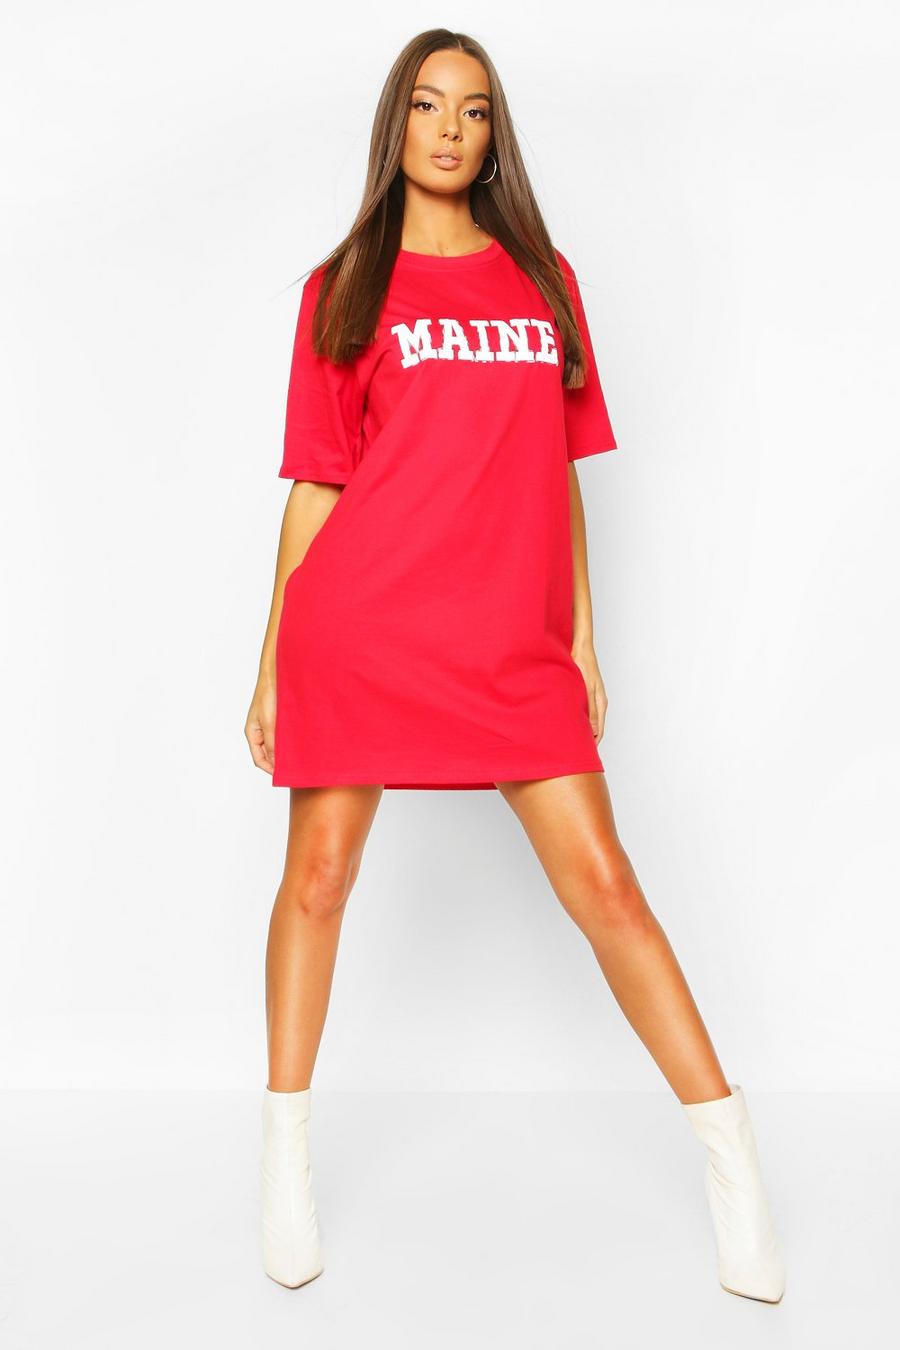 Red Maine Slogan Short Sleeve T-Shirt Dress image number 1